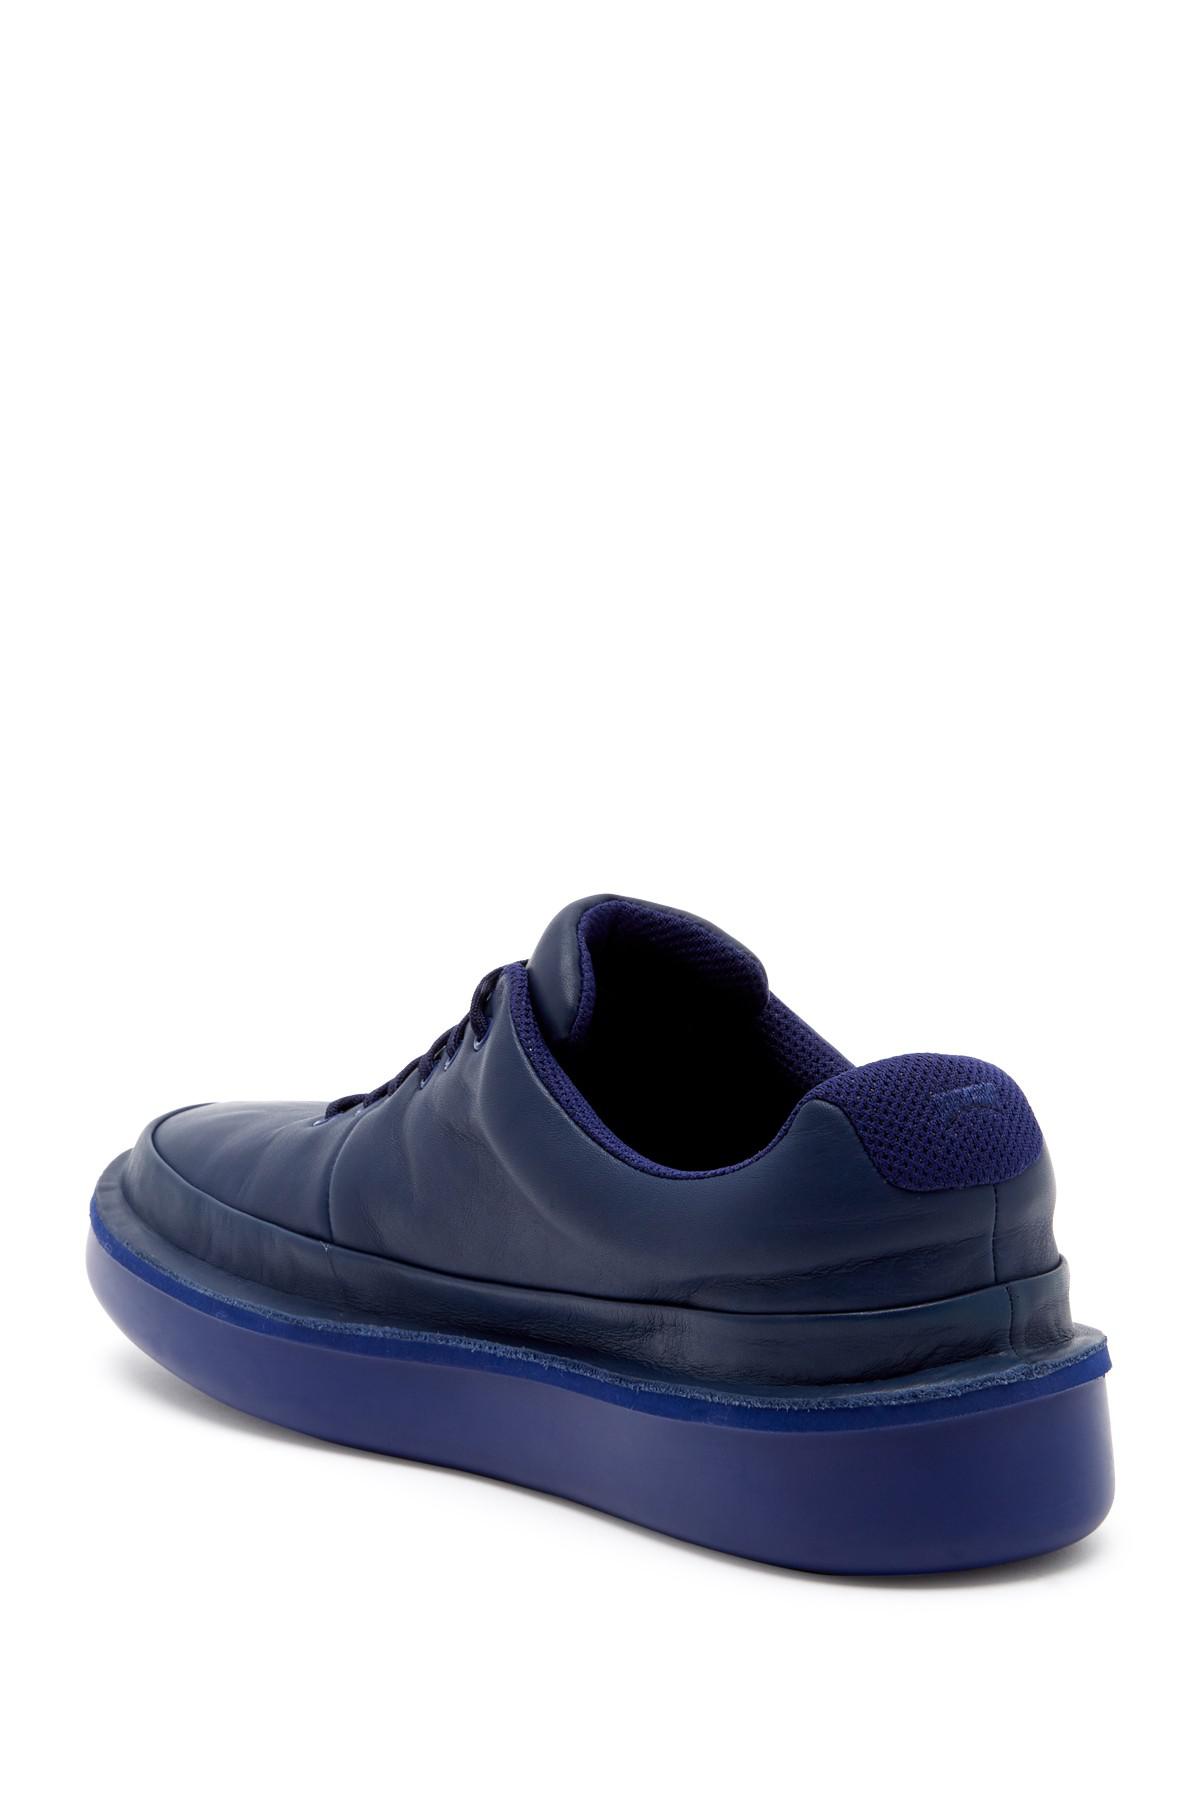 Camper Leather Gorka Extra Light Sneaker in Navy (Blue) for Men - Lyst